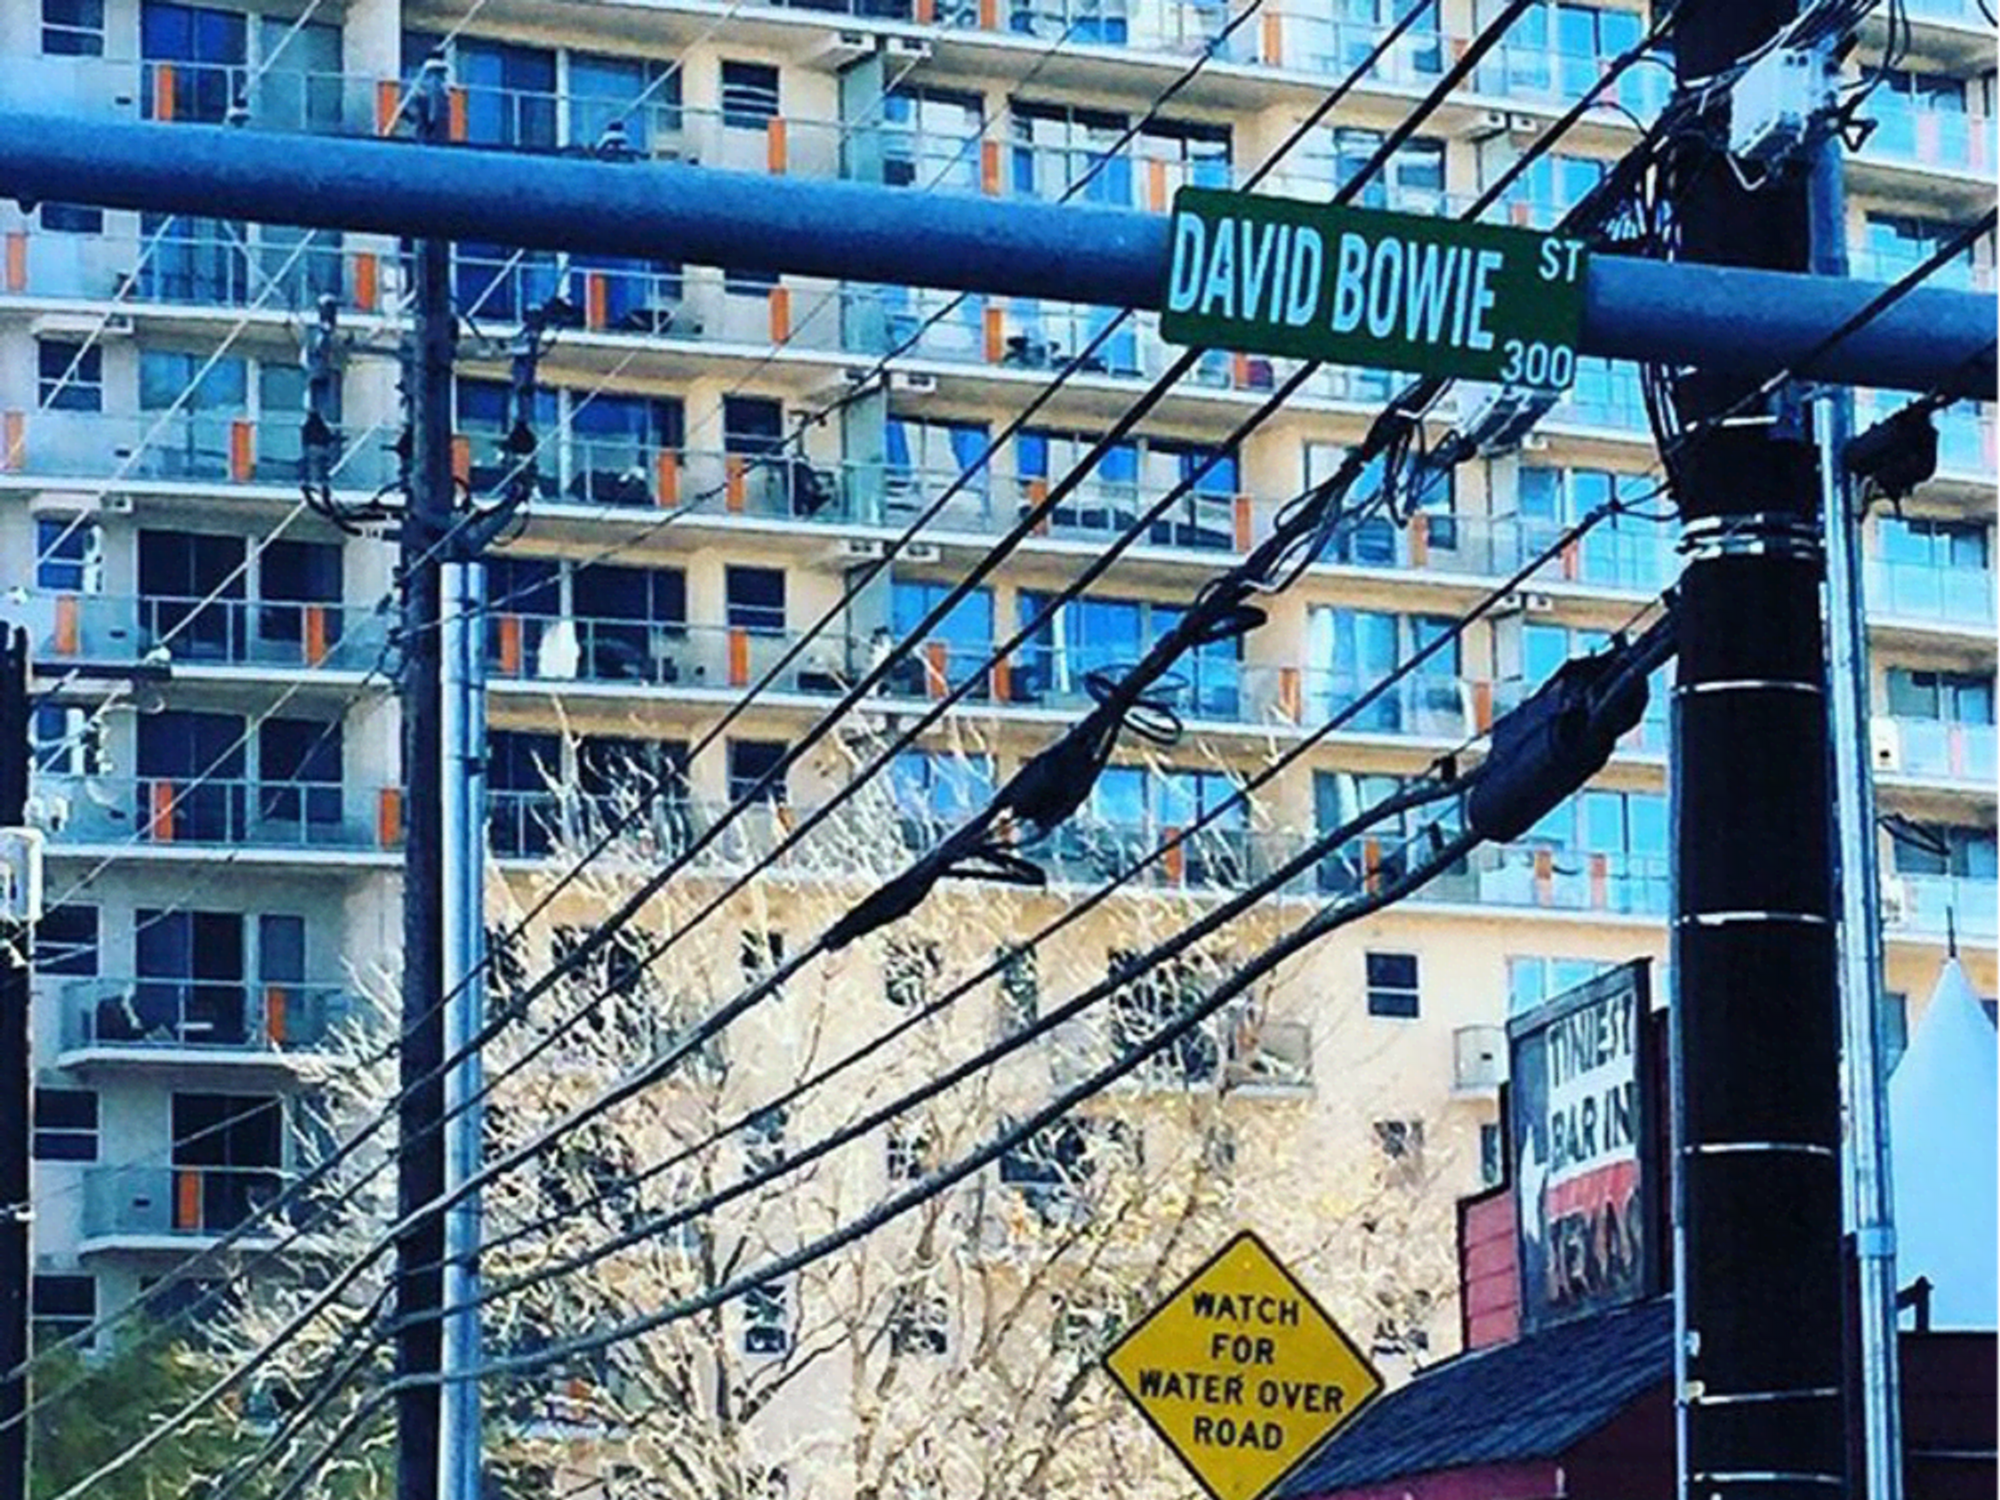 David Bowie Street downtown Austin name change January 2015